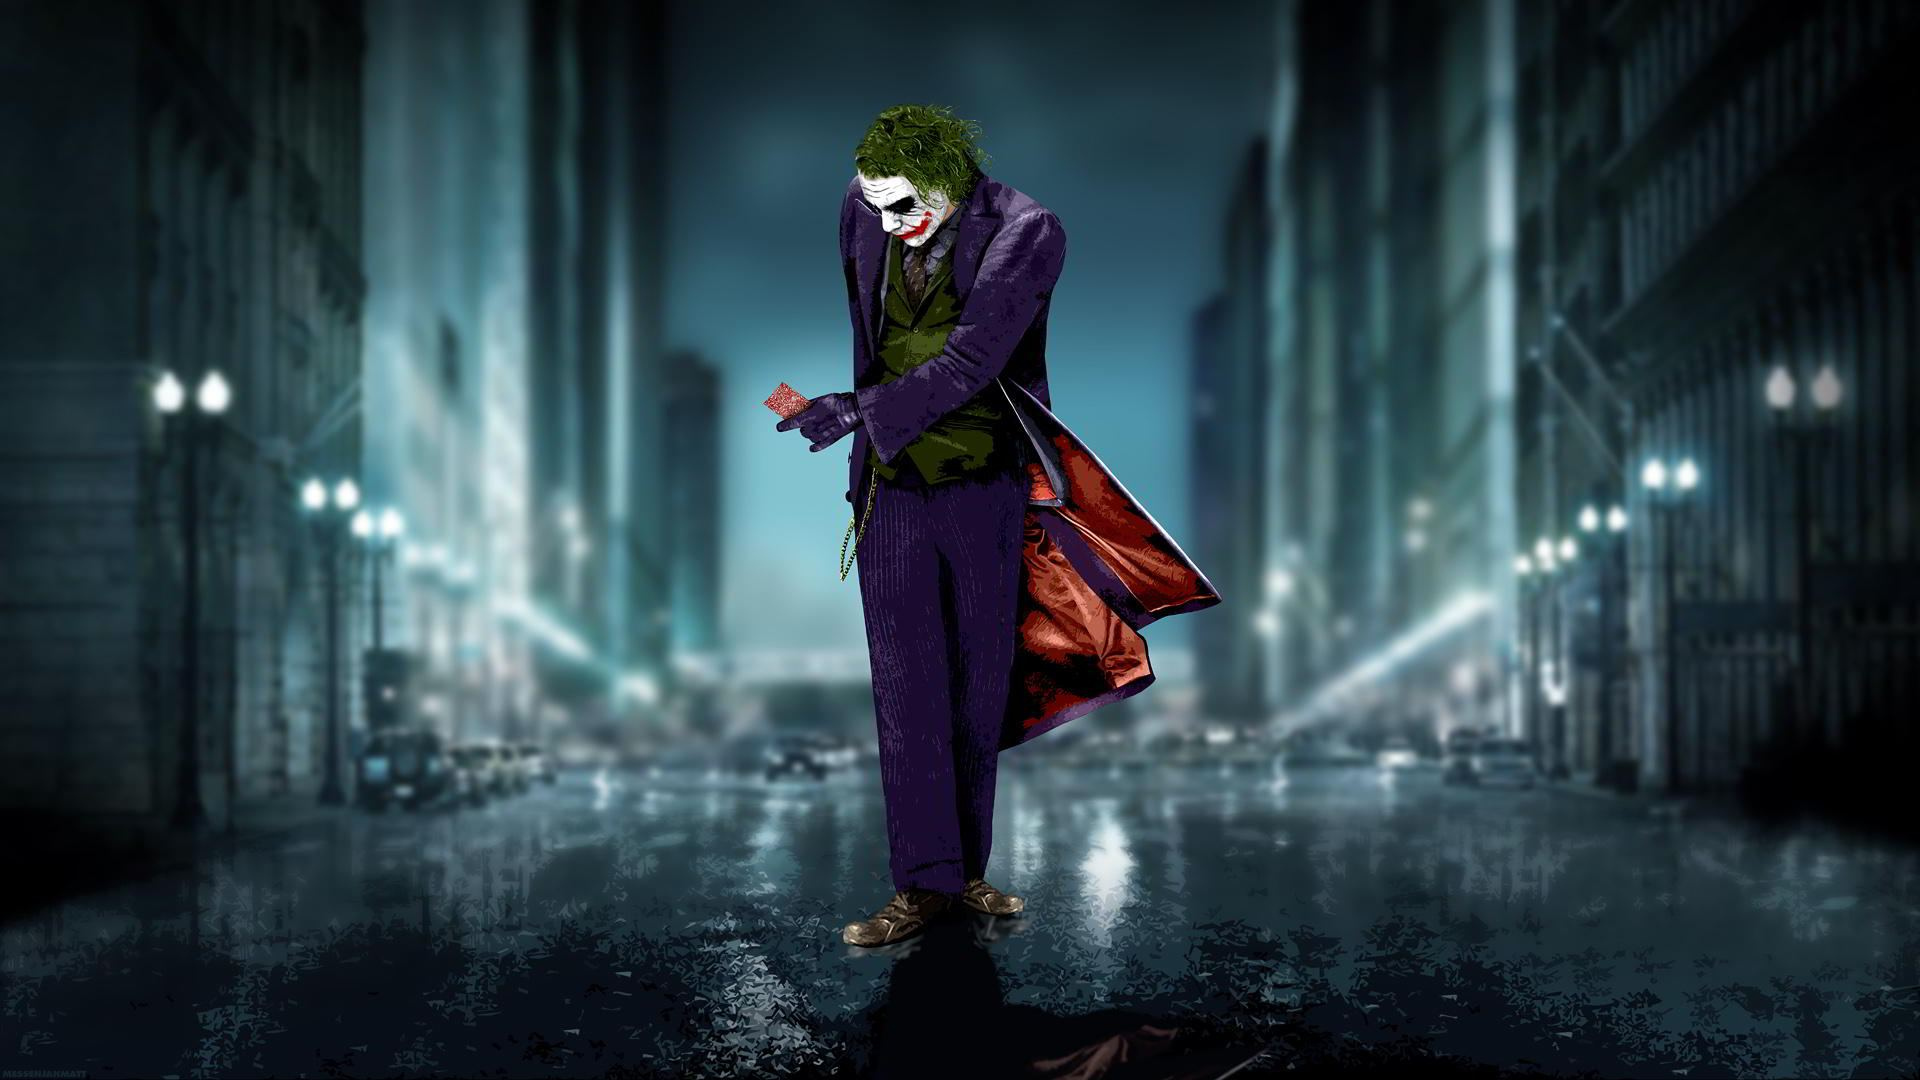 Joker on the road